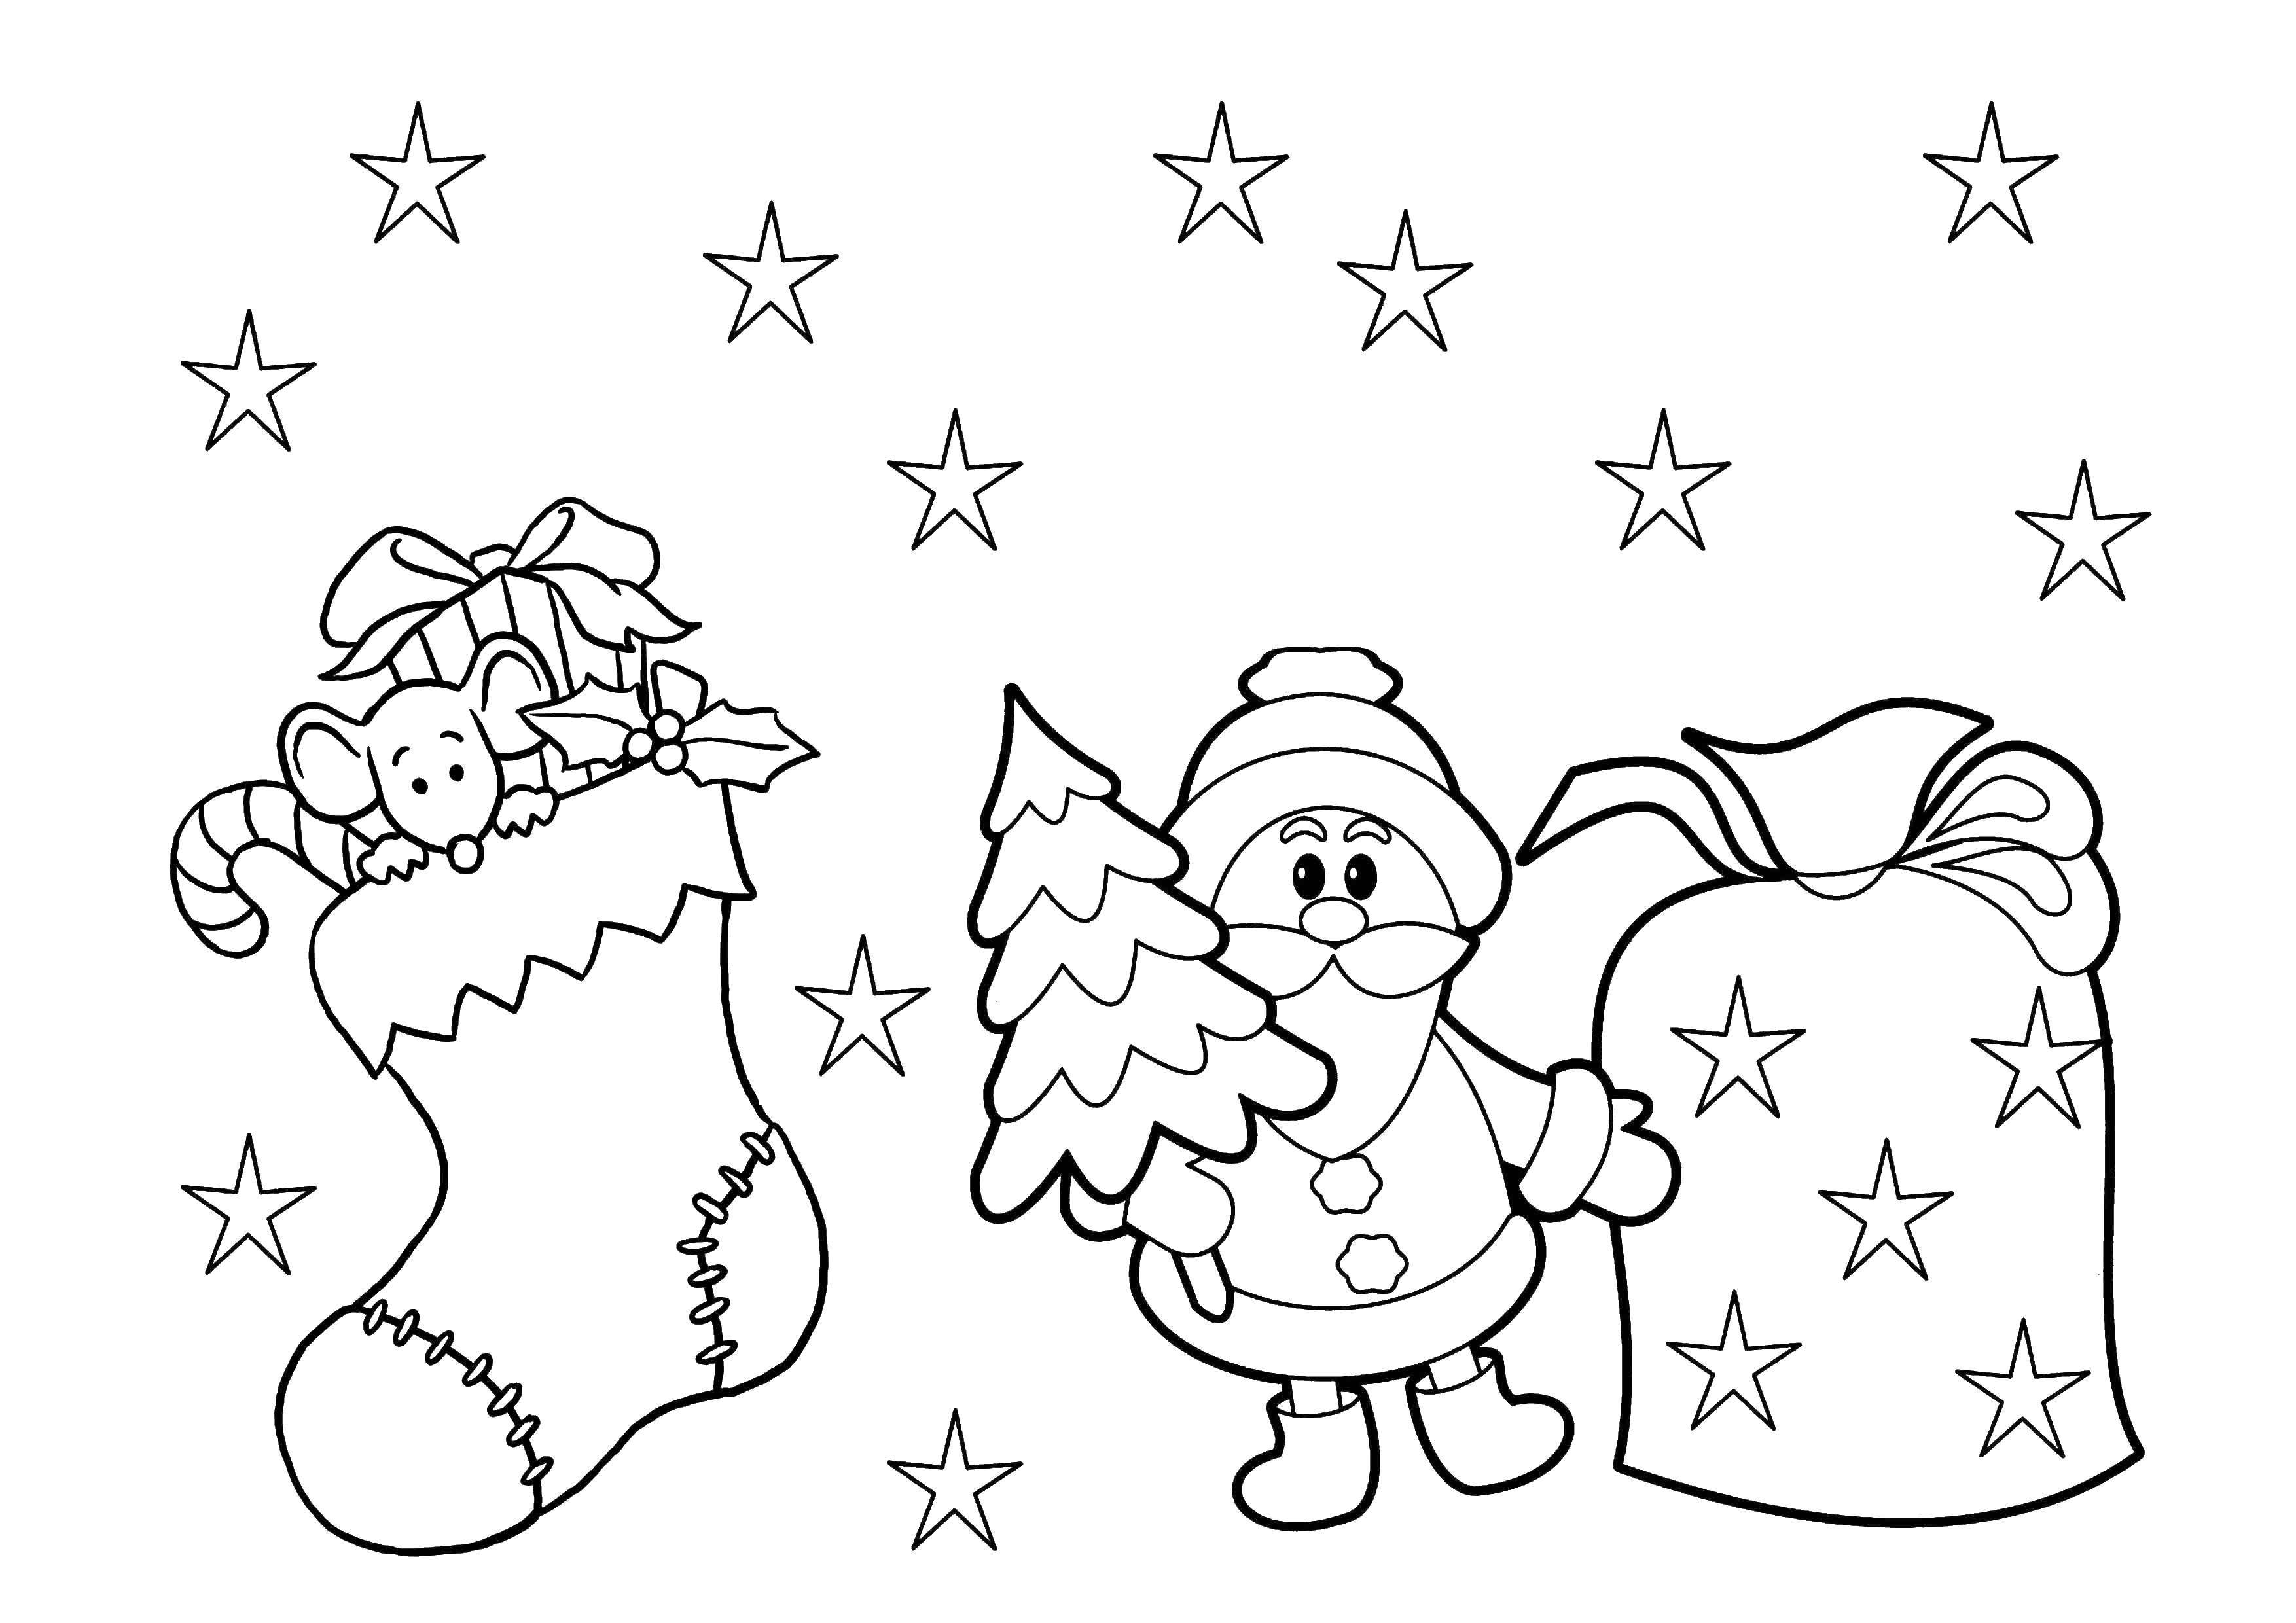 Название: Раскраска Дед мороз и мешок подарков. Категория: рождество. Теги: дед мороз, мешок, носок, игрушки.